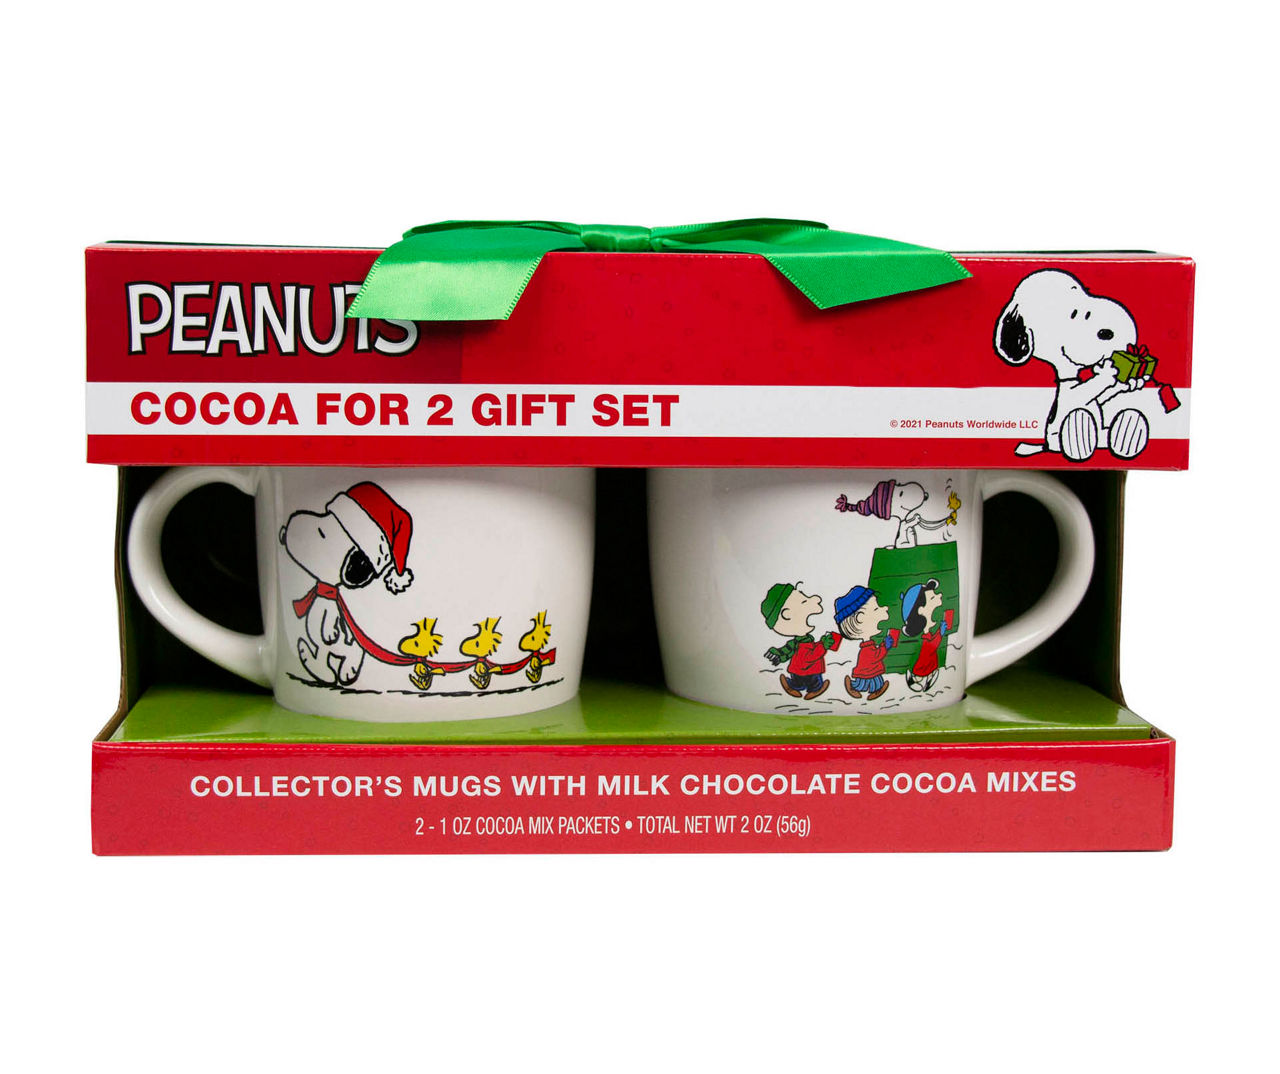 Peanuts Gift Tags, CollectPeanuts.com